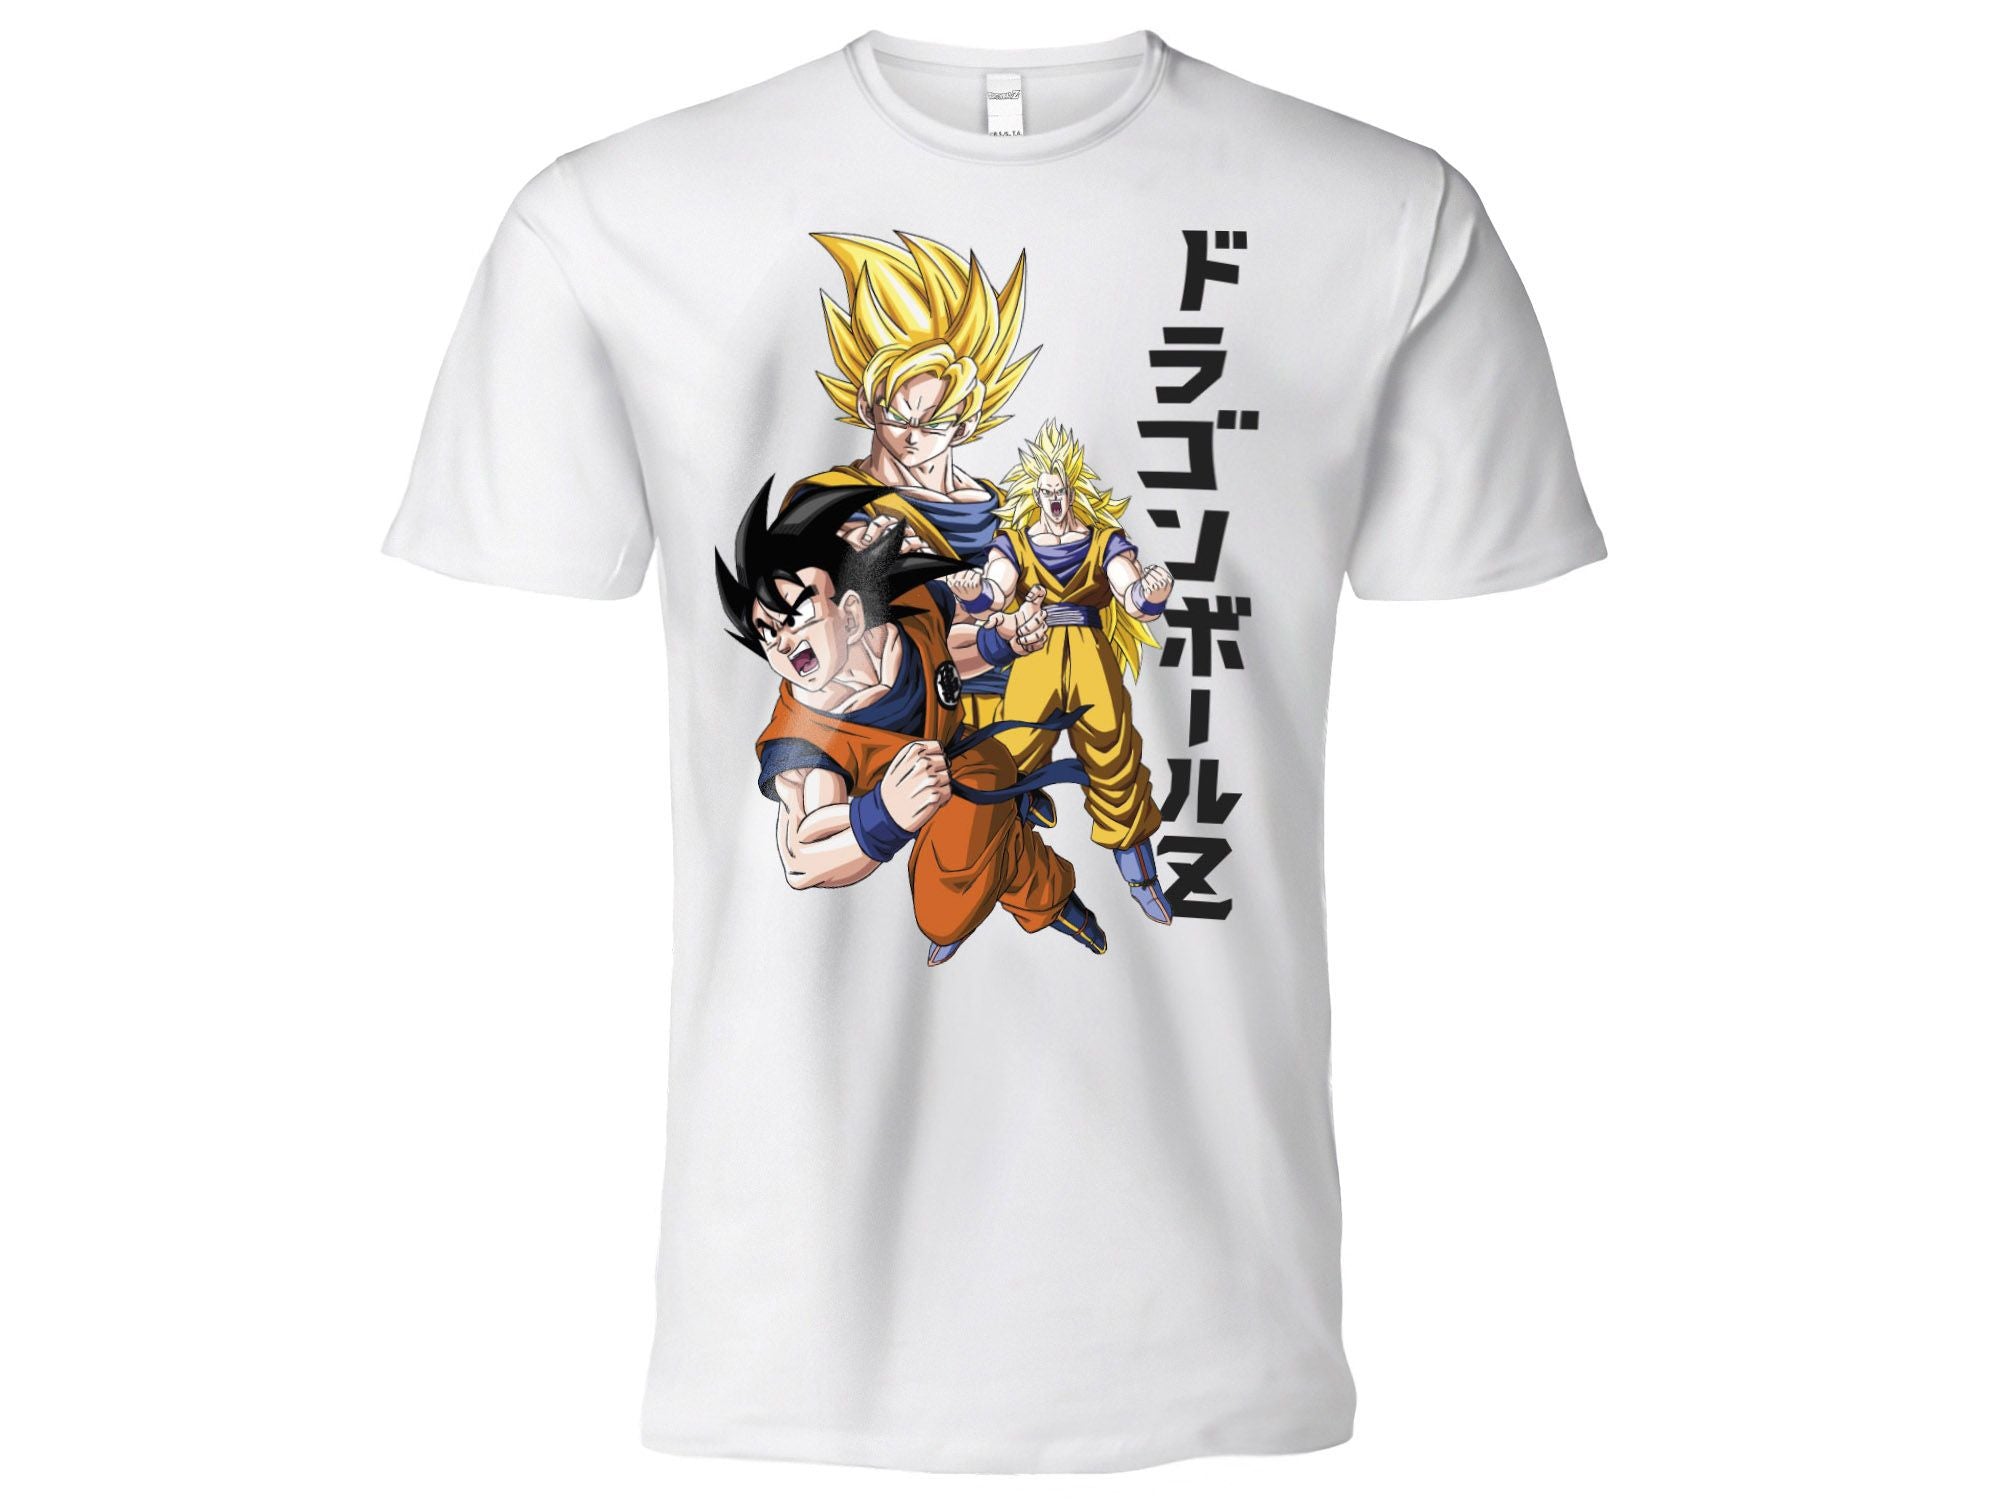 DRAGON BALL Z - T-Shirt Goku S.Saiyan livello 1-2-3 9-11 bianca - Disponibile in 2/3 giorni lavorativi